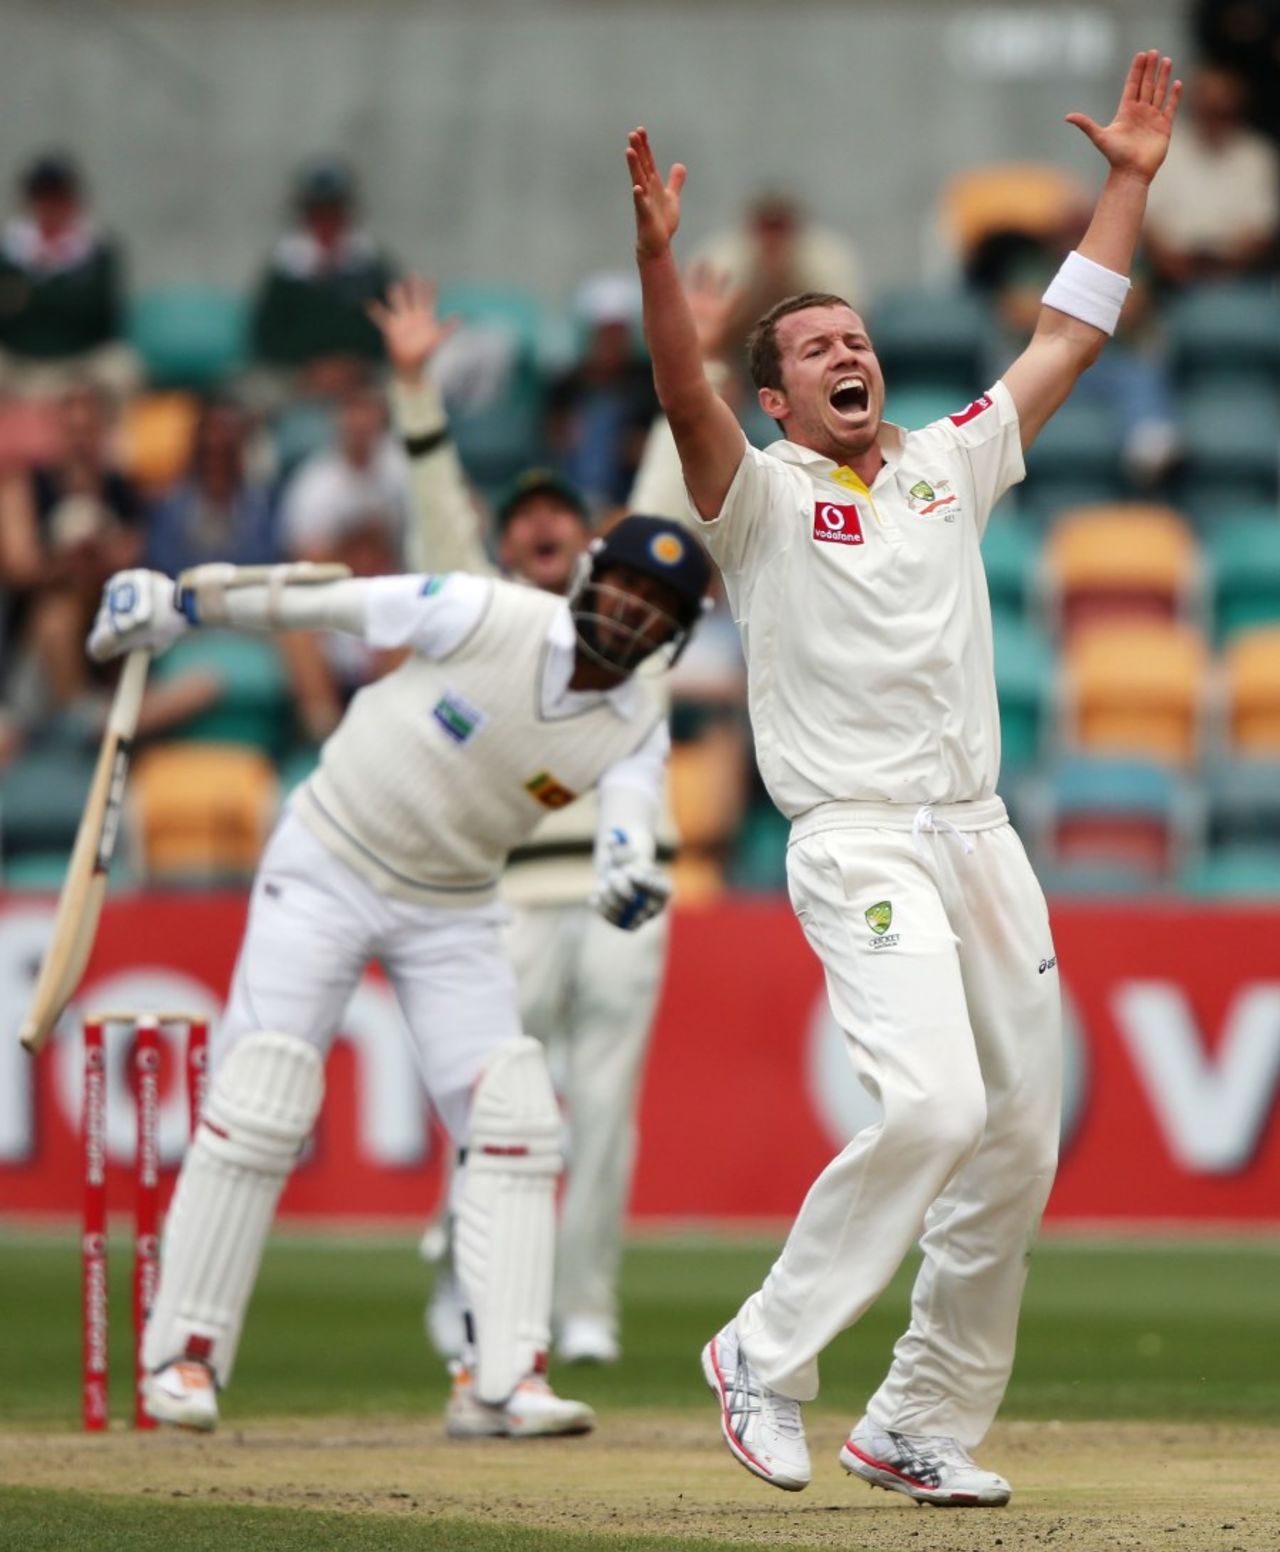 Peter Siddle has Kumar Sangakkara trapped lbw, Australia v Sri Lanka, 1st Test, Hobart, 5th day, December 18, 2012